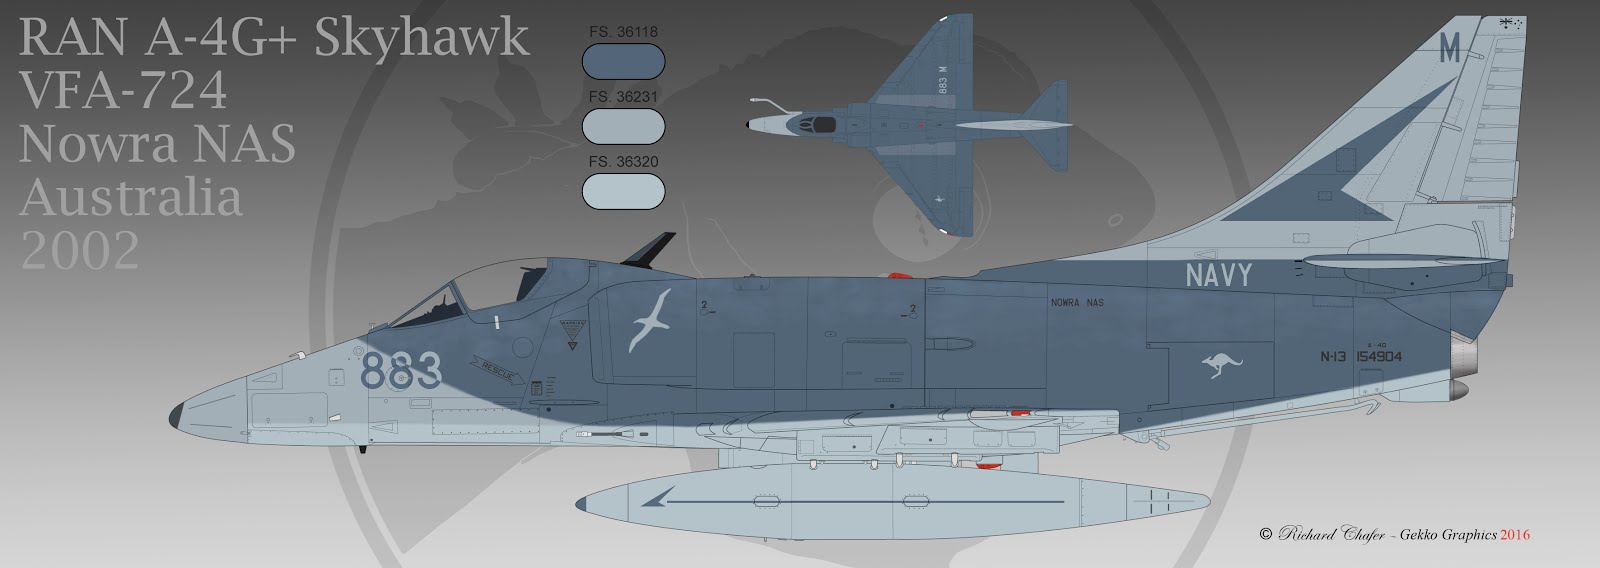 RAN A-4G+ Skyhawk 2002